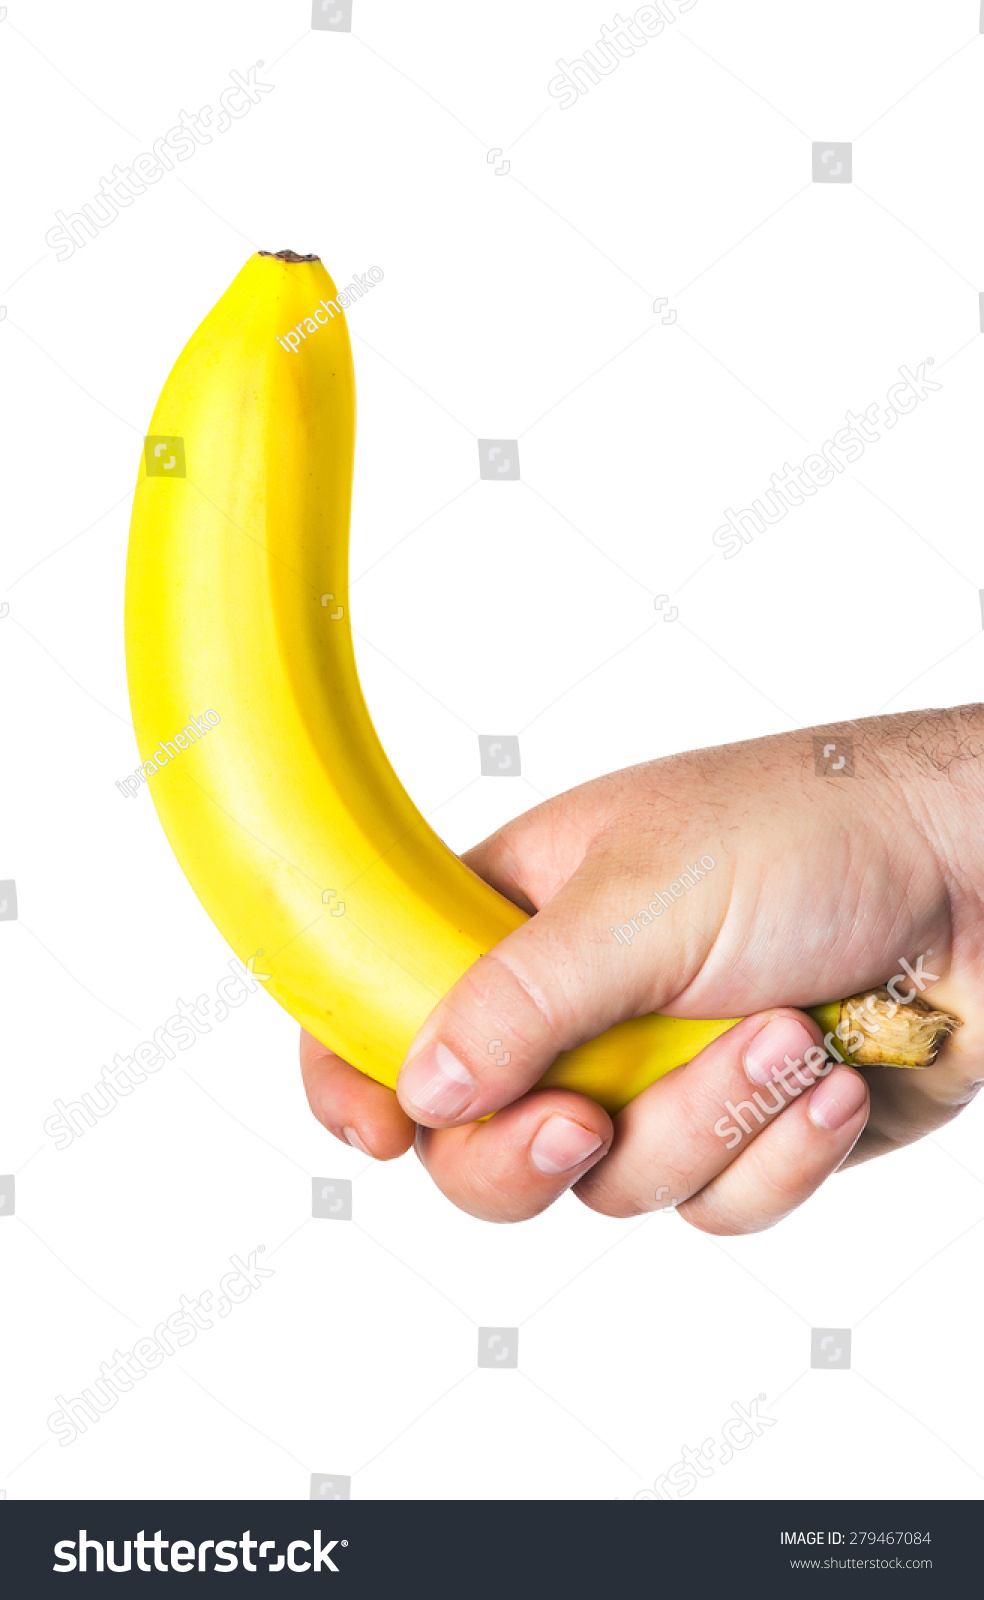 Banana In Penis 64